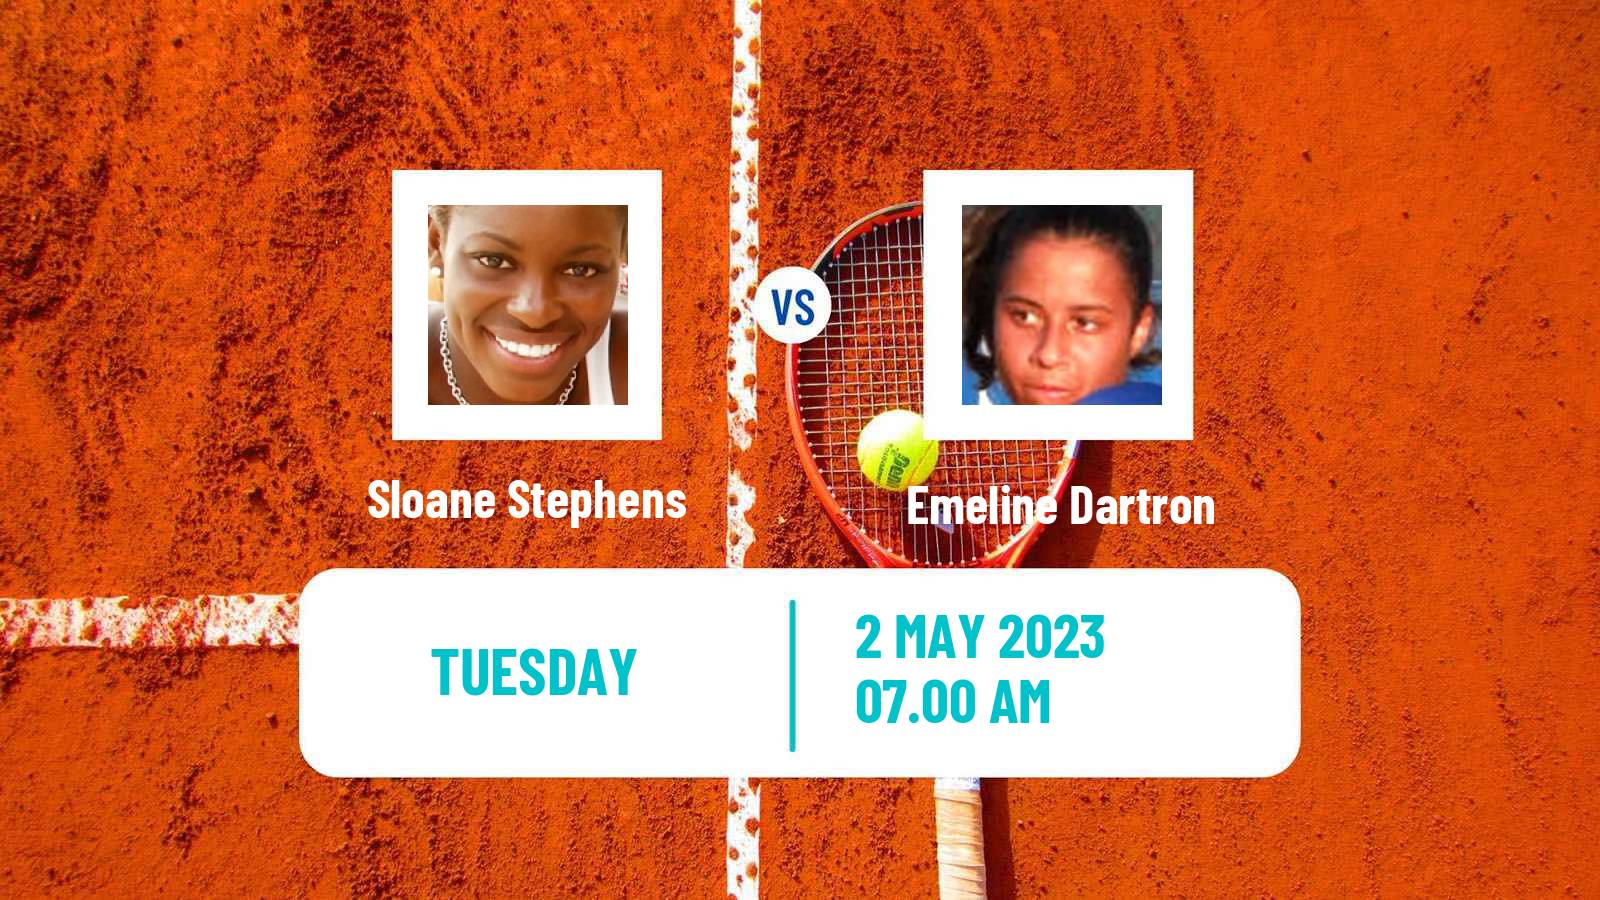 Tennis ATP Challenger Sloane Stephens - Emeline Dartron